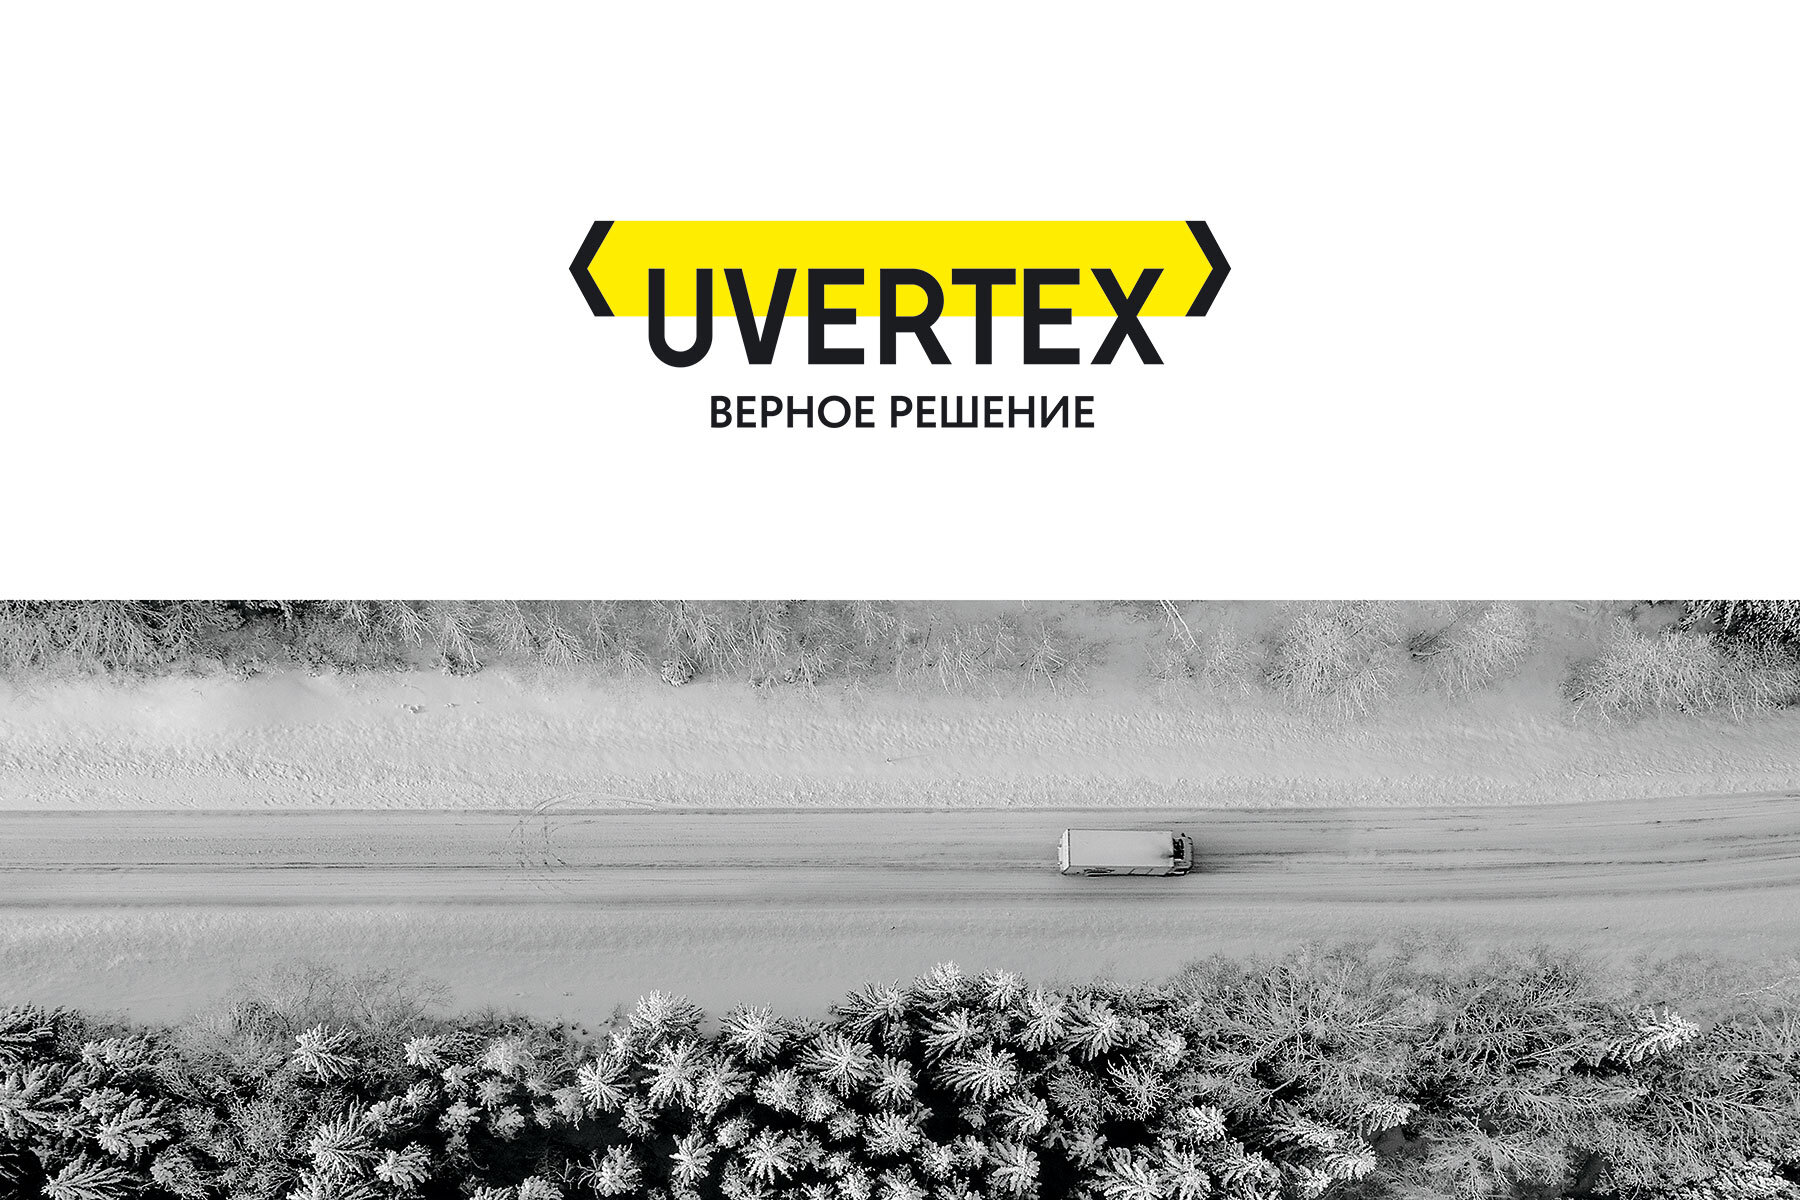 Uvertex-01.jpg